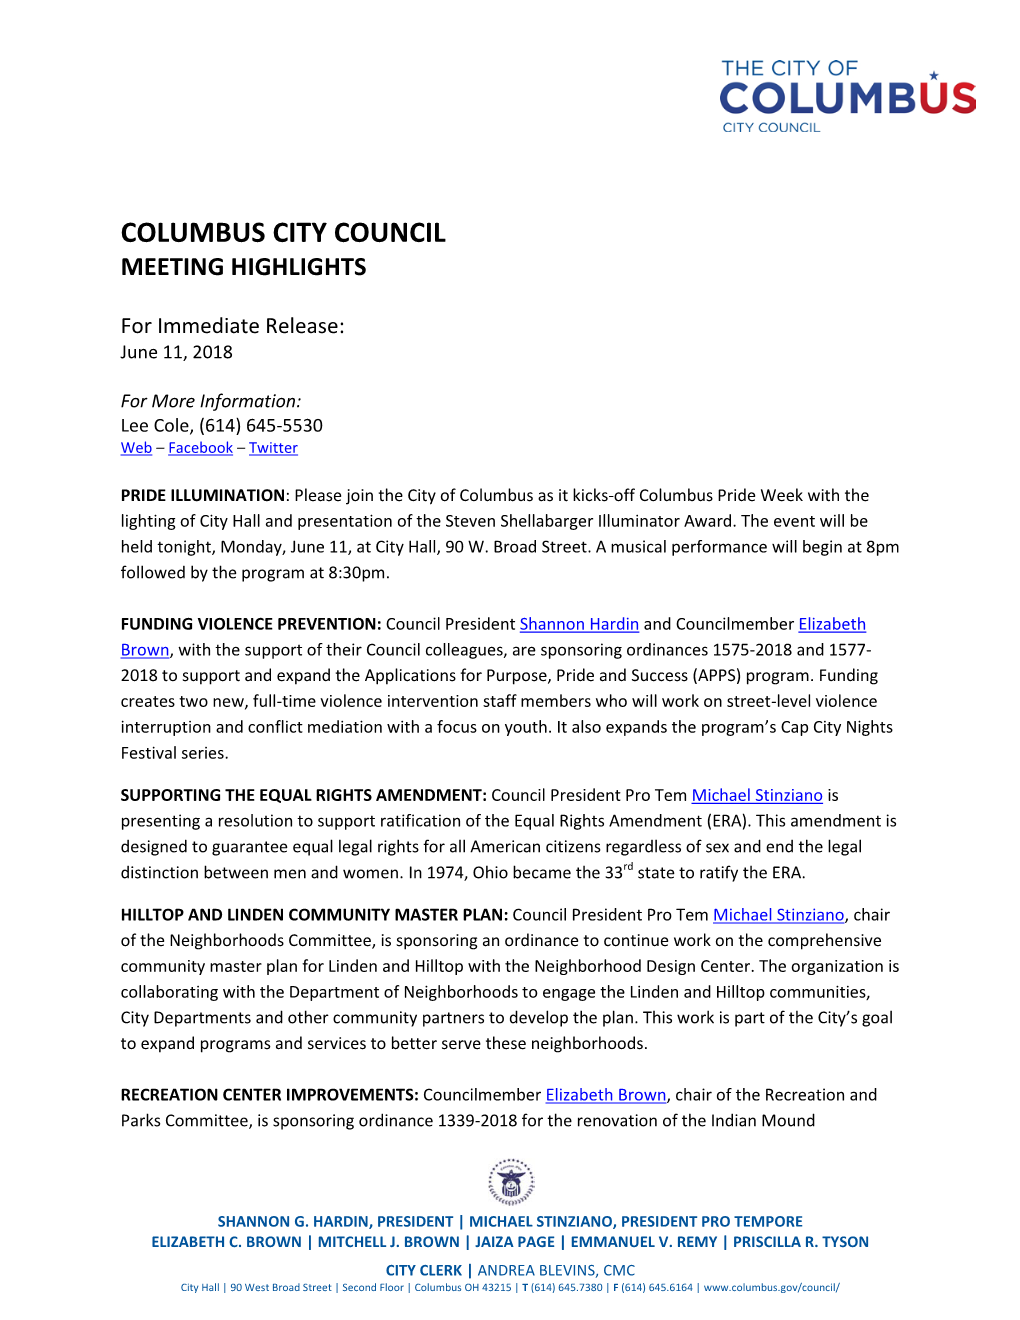 Columbus City Council Meeting Highlights